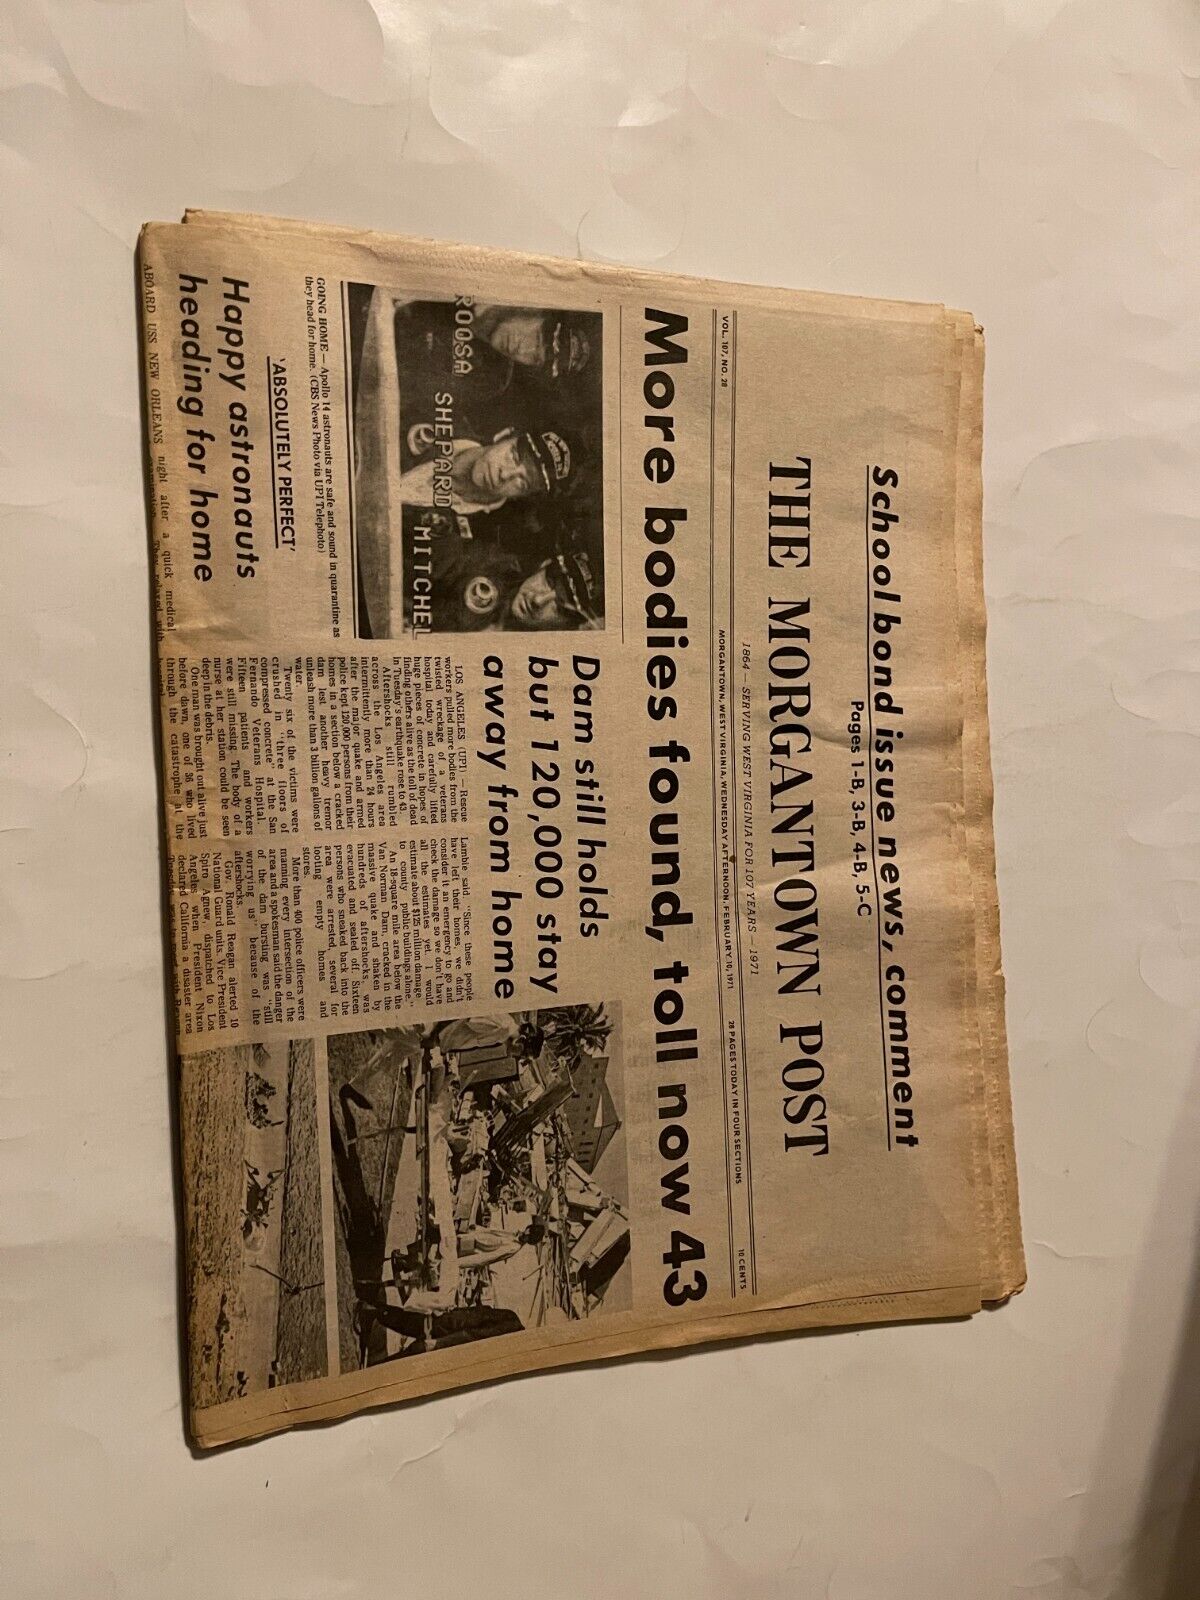 February 10 1971 morgantown west virginia newspaper-earthquake-stock market